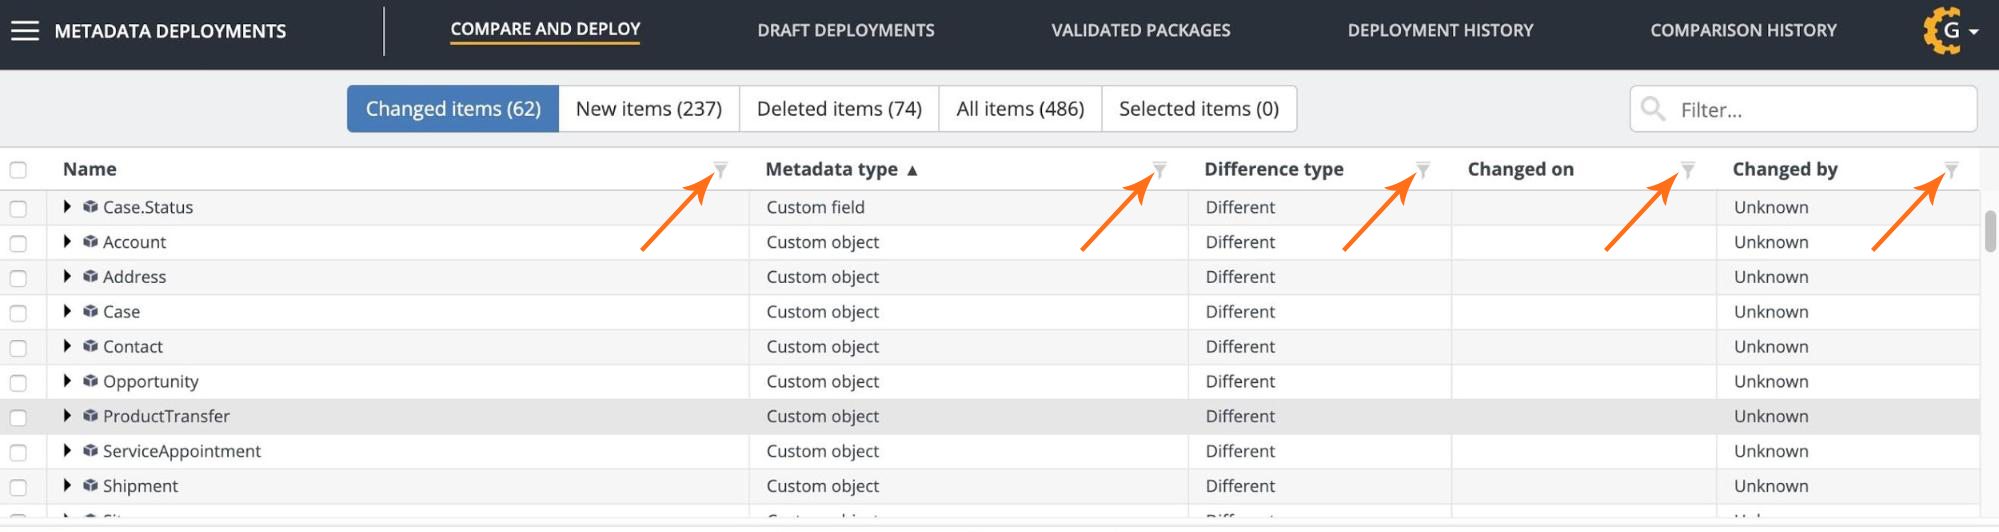 Filtering the list of metadata items